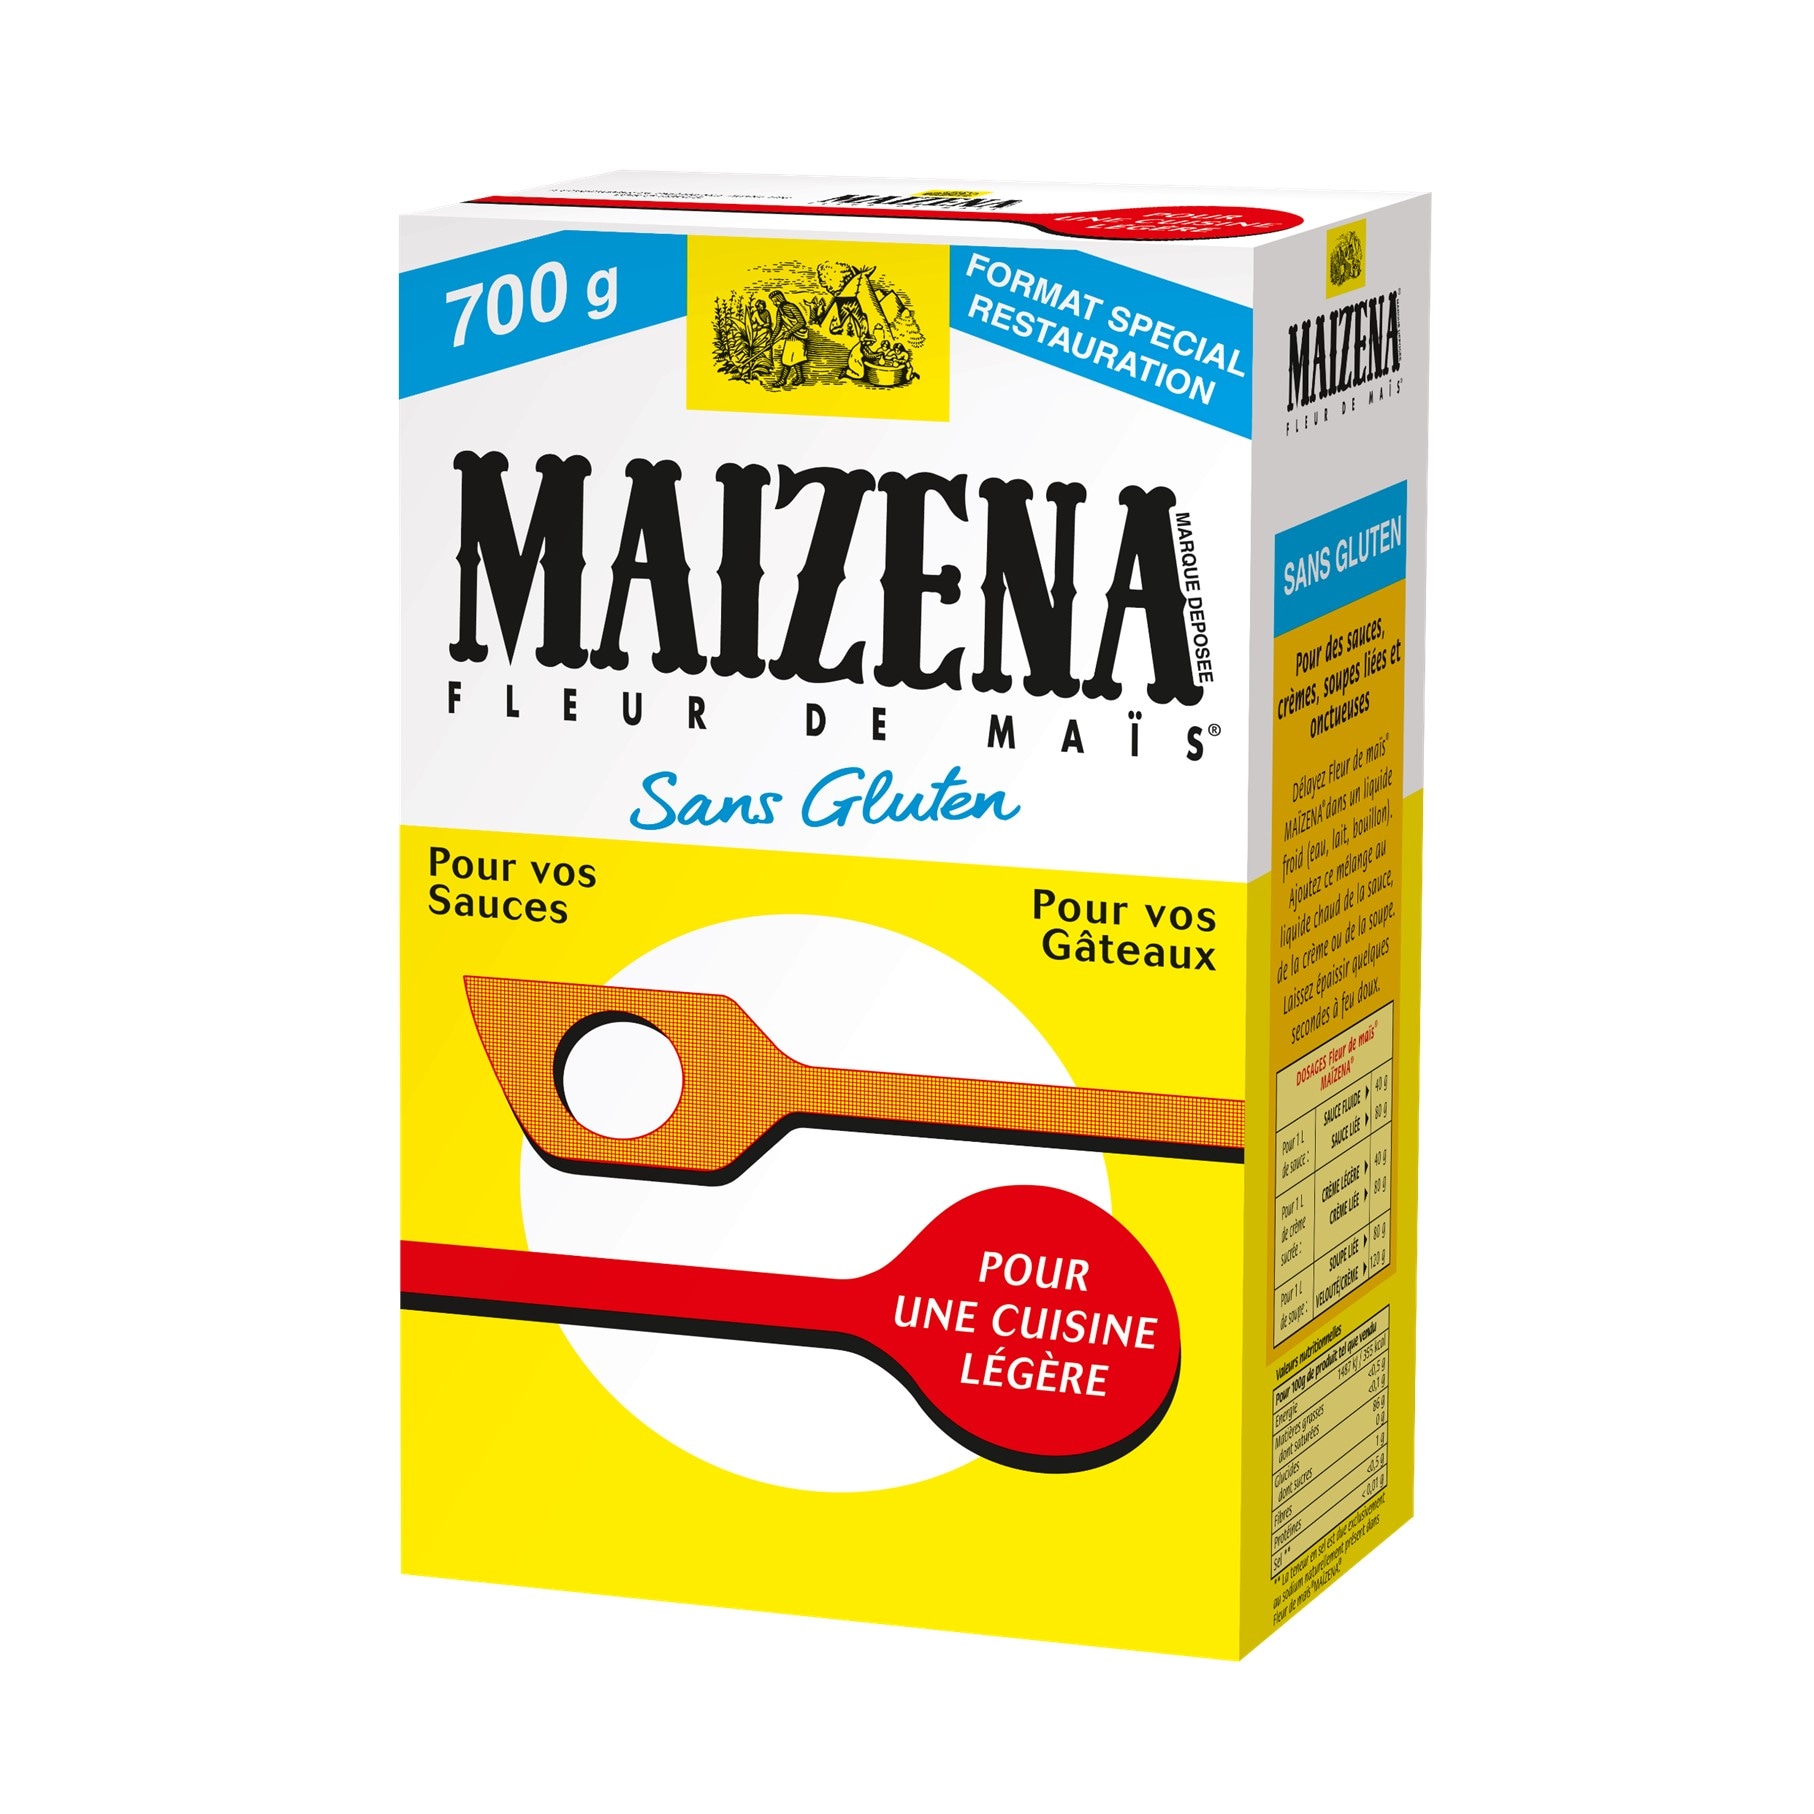 Maizena Fleur de maïs 700g - Avec Fleur de Maïs Maïzena®, allégez vos desserts gourmands.*